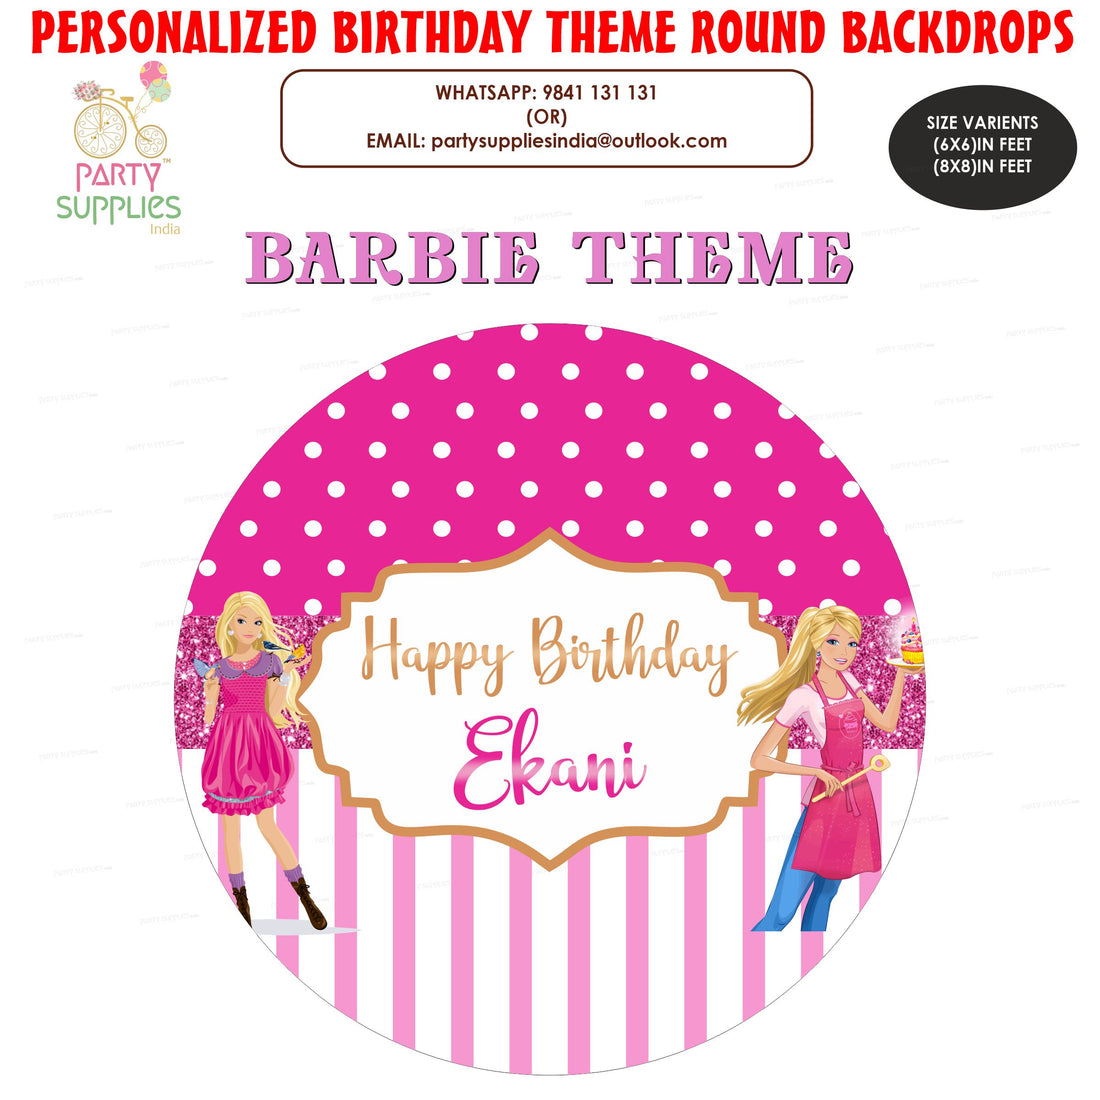 PSI Barbie Theme Round Customized Backdrop